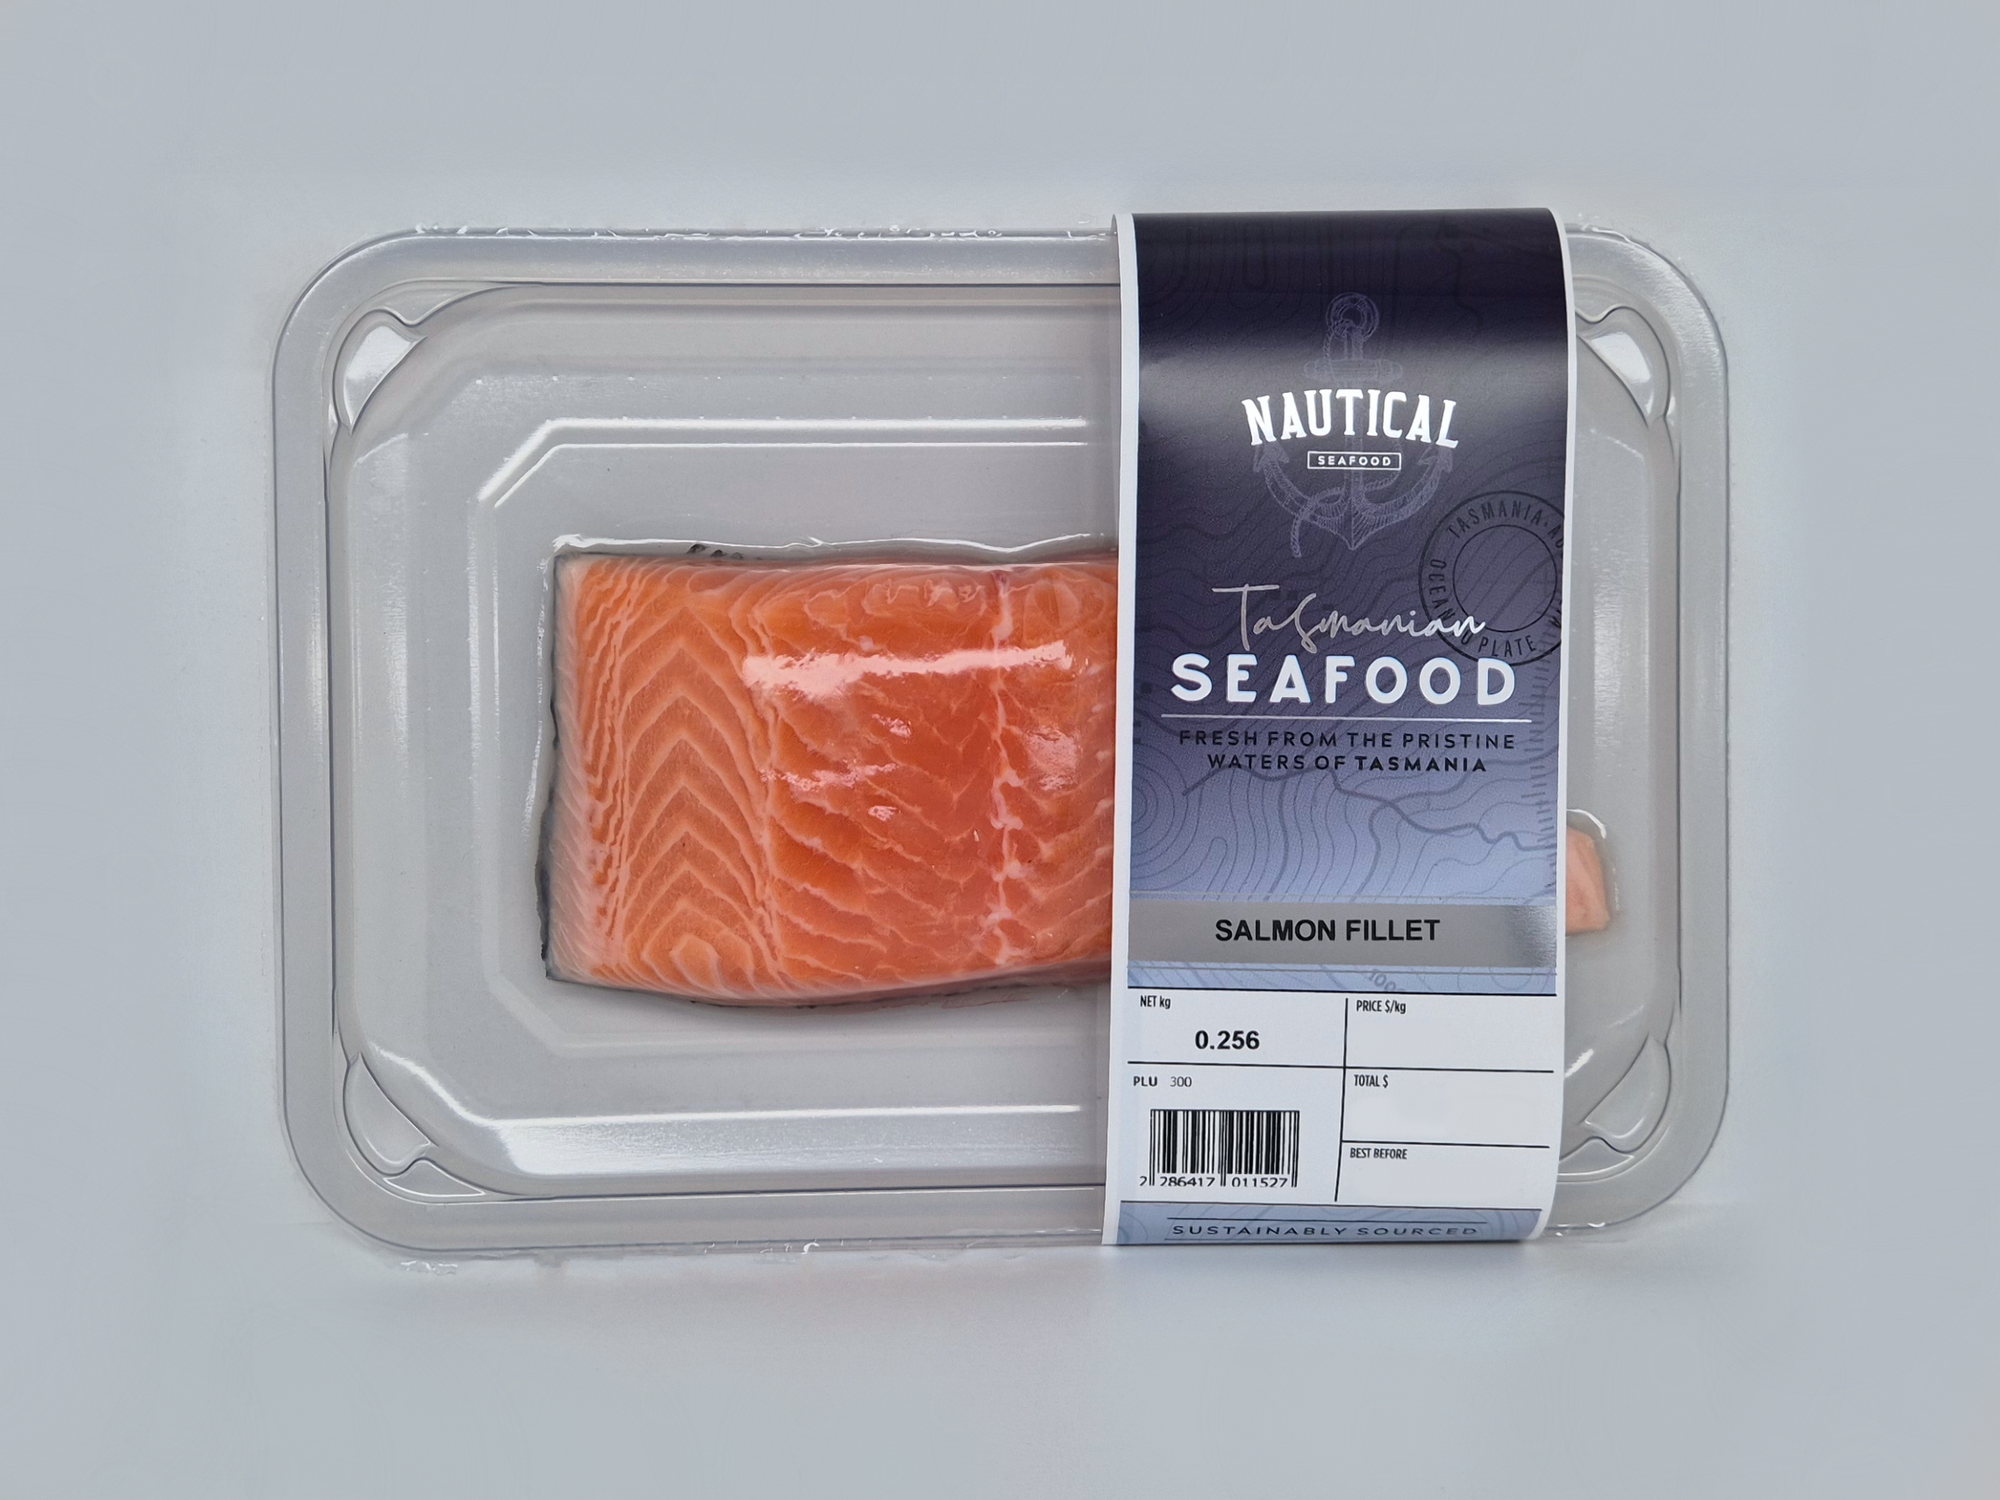 Nautical Seafood Salmon Fillet